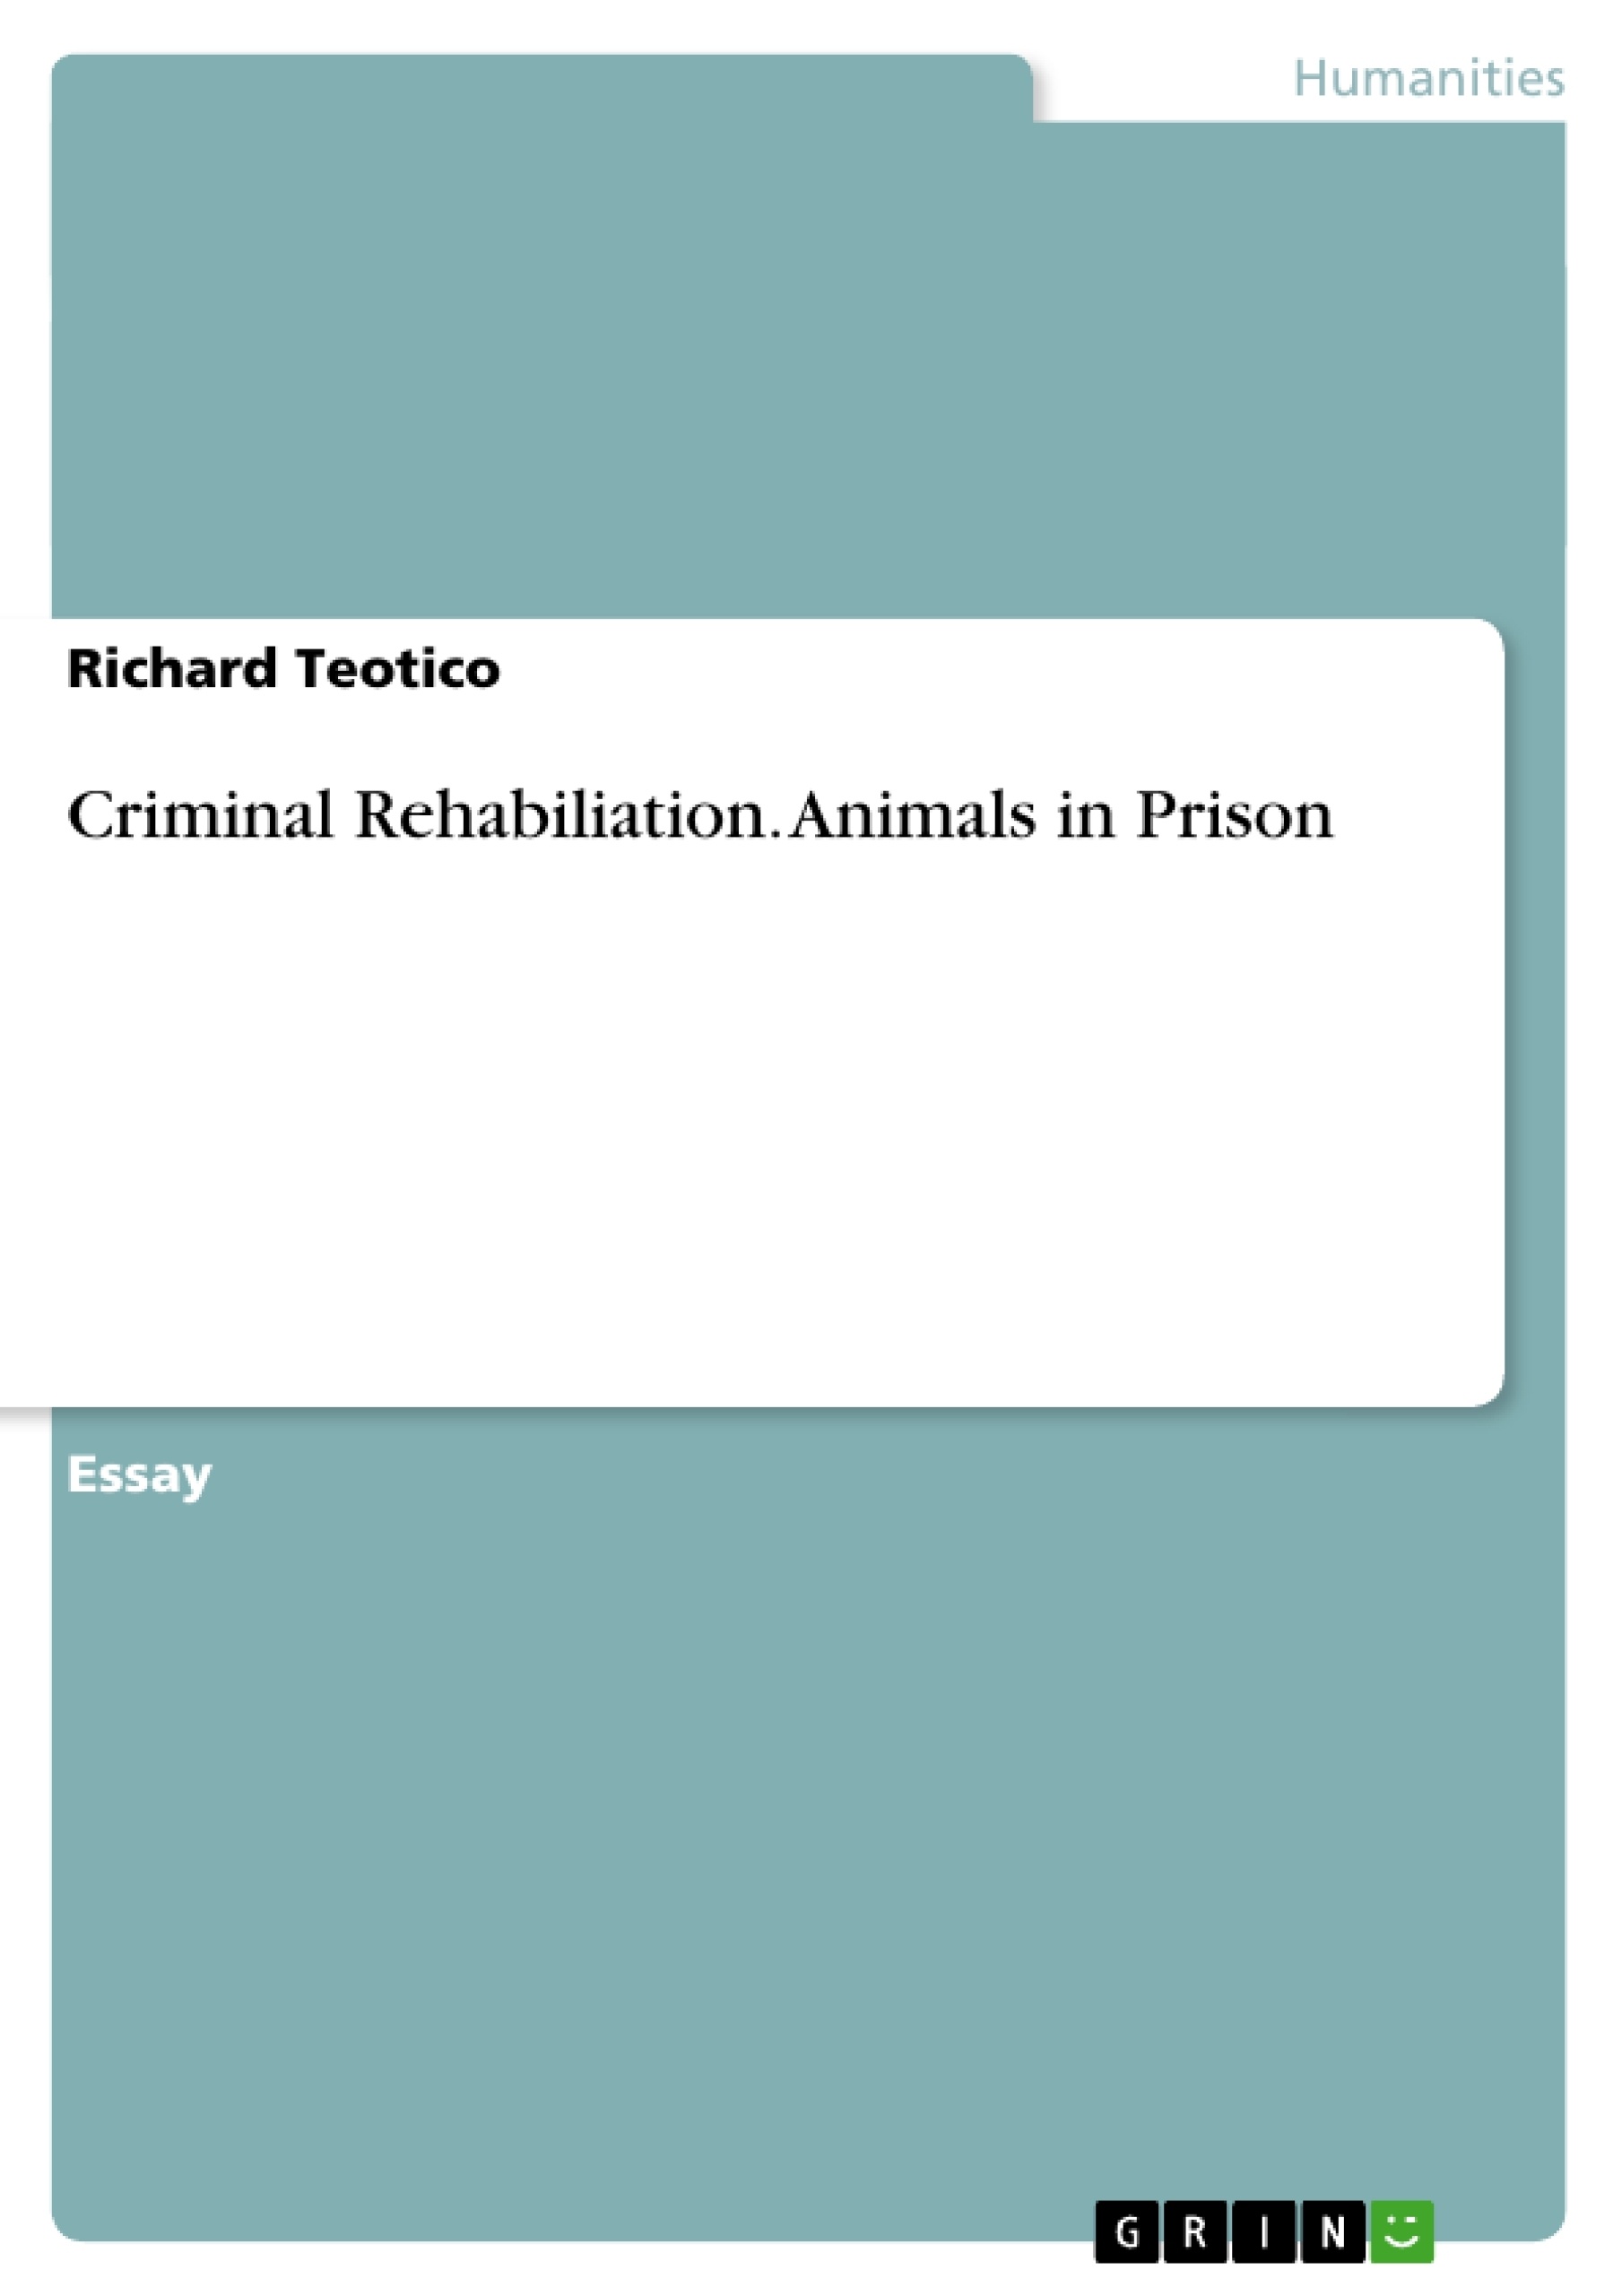 Criminal Rehabiliation. Animals in Prison - GRIN